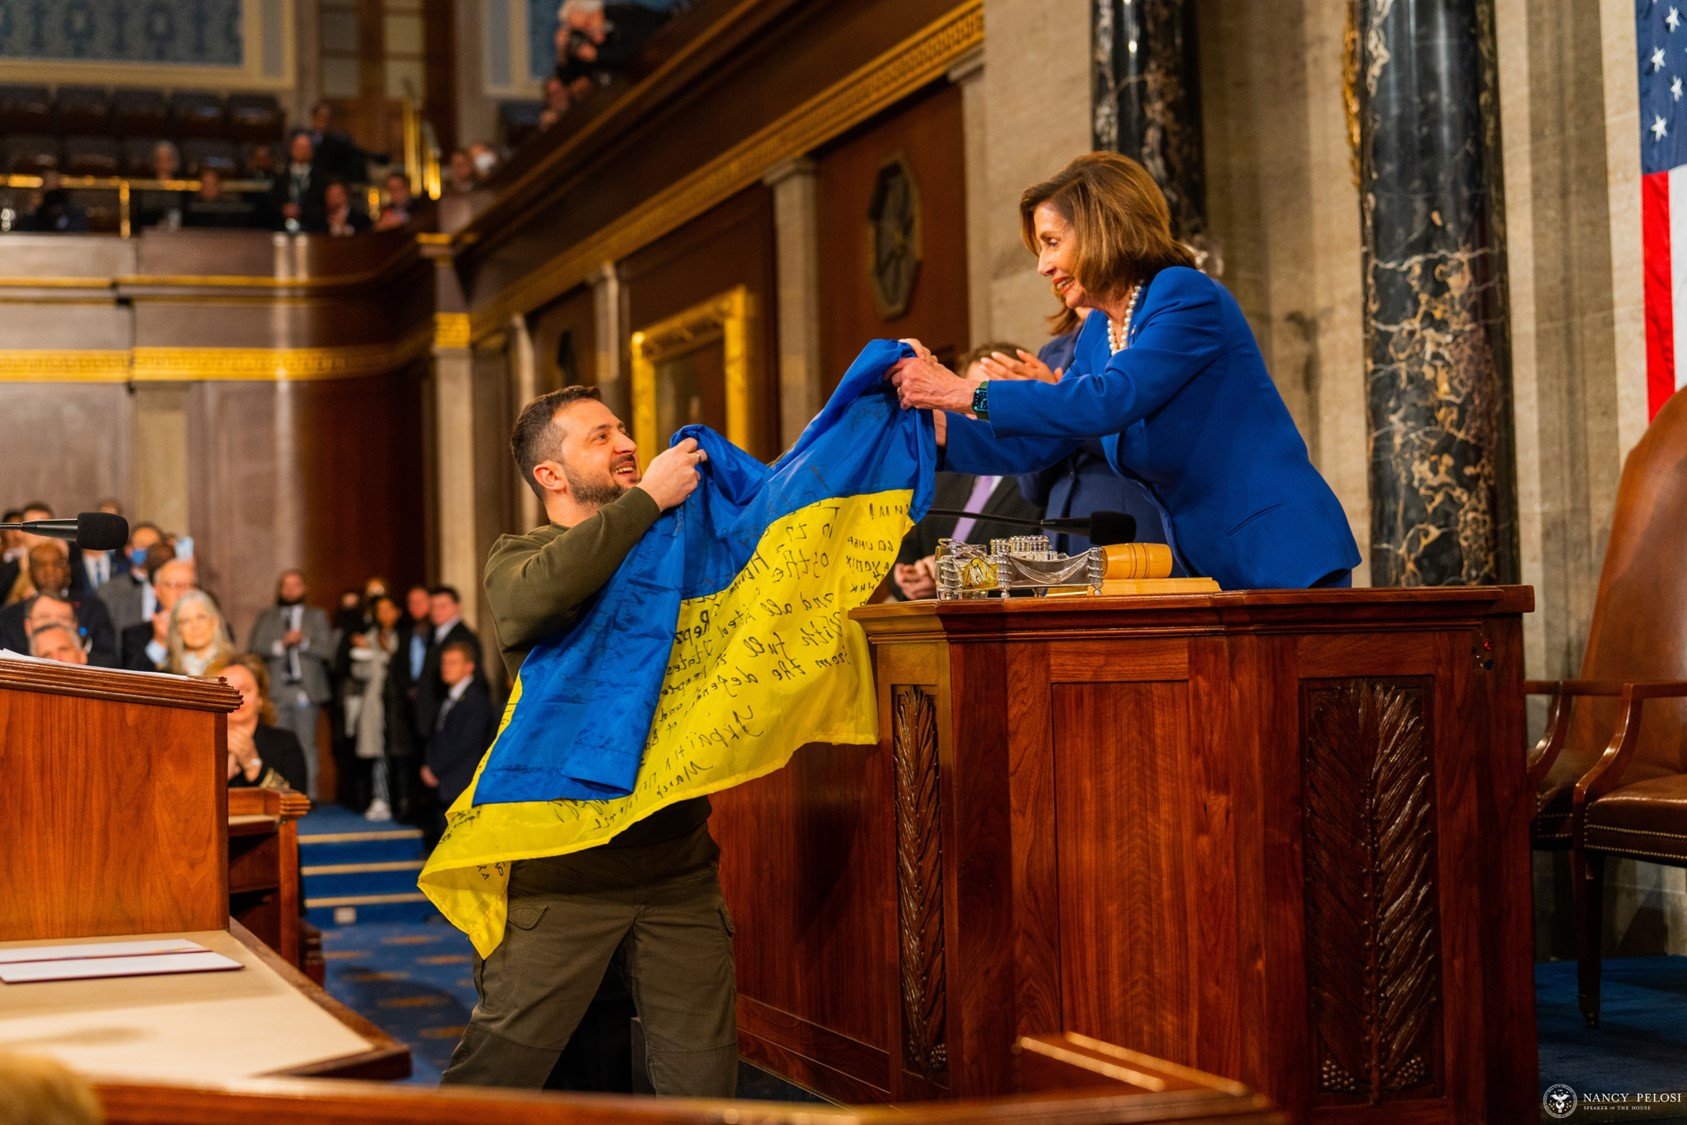 Ukrainian President Volodymyr Zelenskyy addressed the US Congress on Wednesday